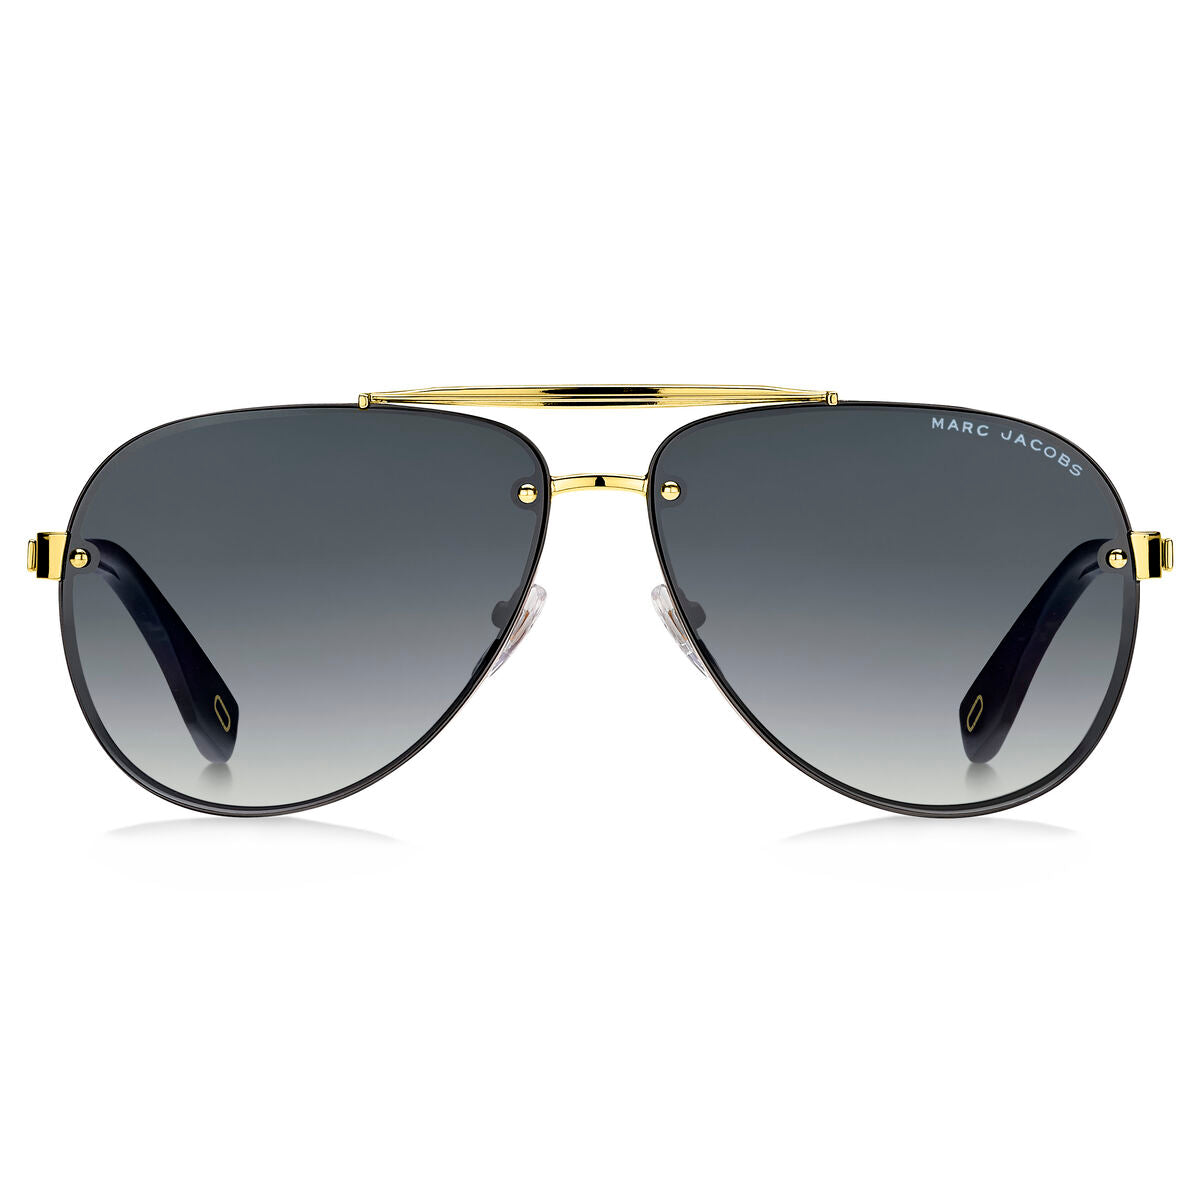 Men's Sunglasses Marc Jacobs MARC-317-S-2F7-9O